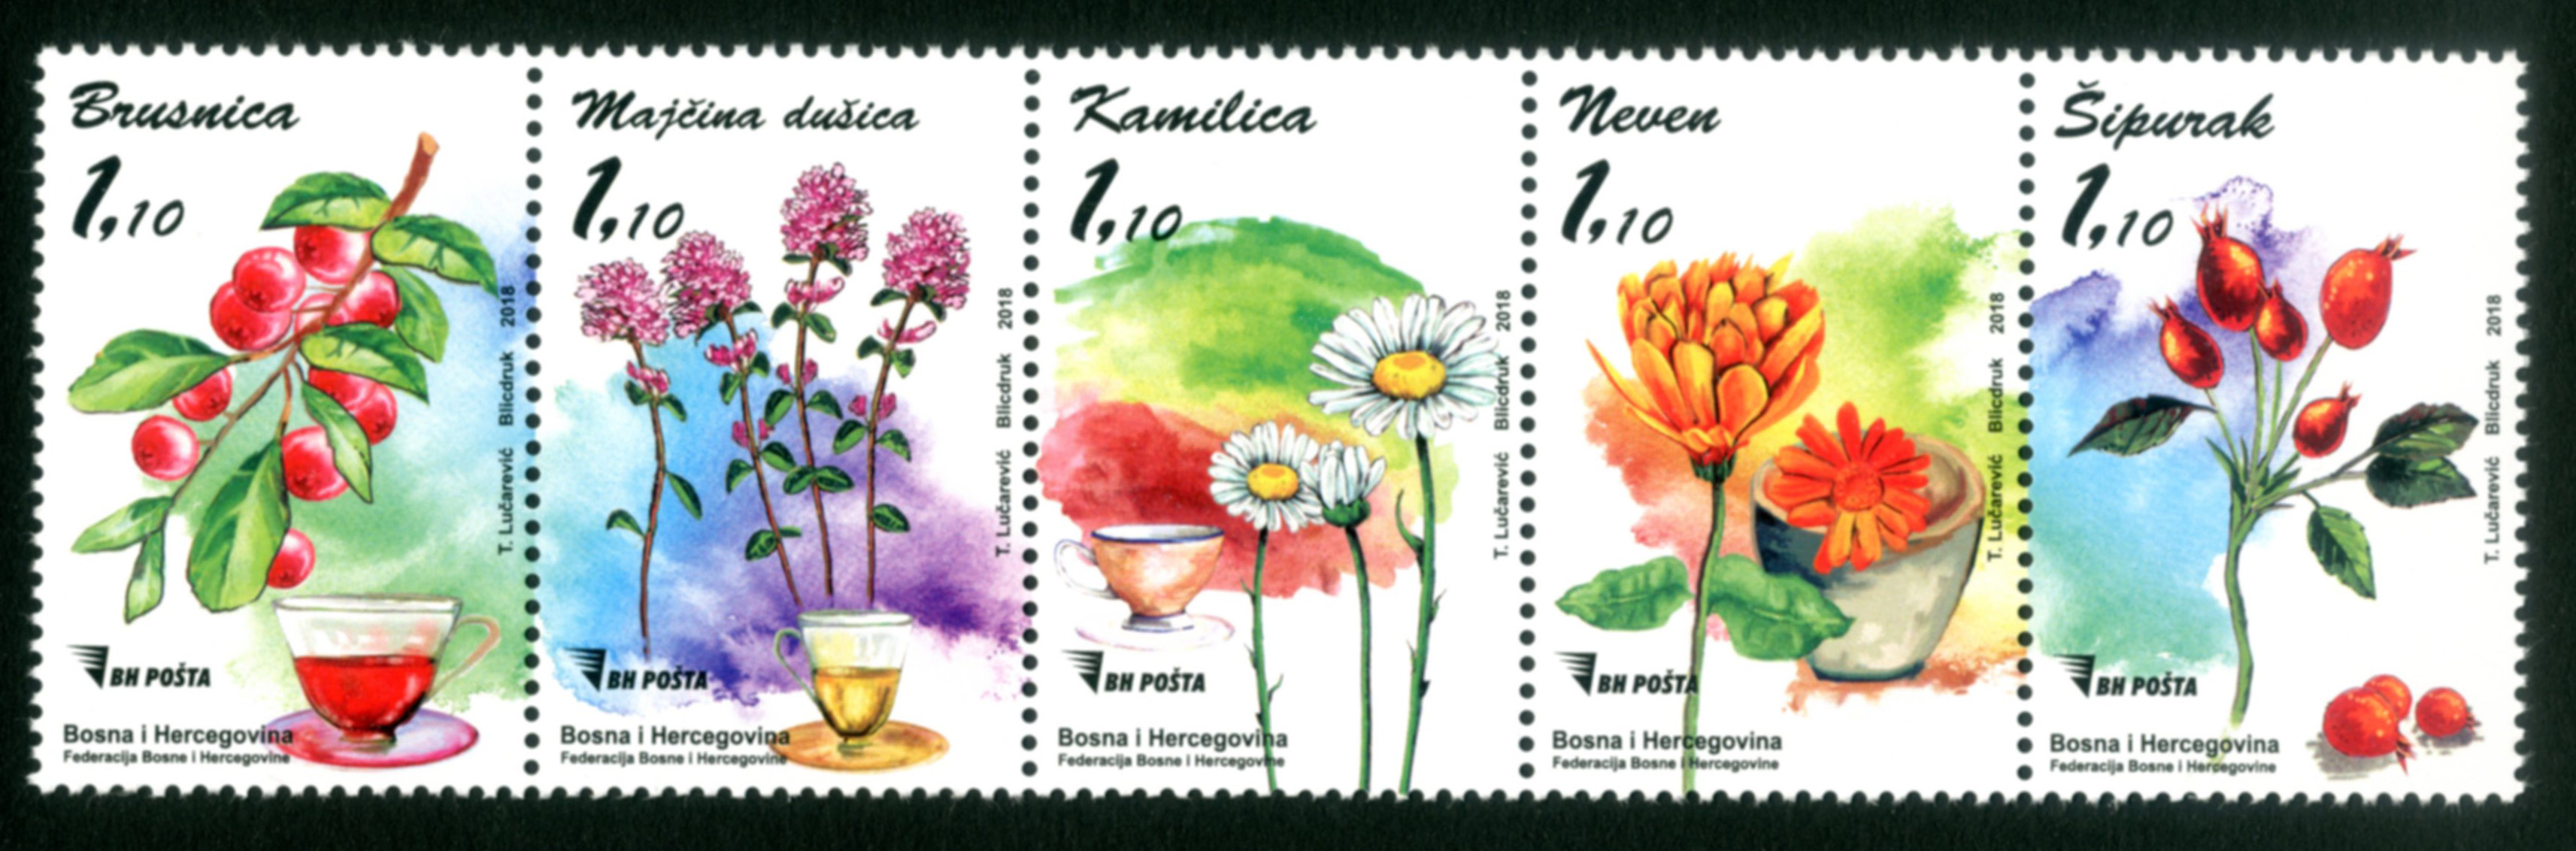 flora-terapeutic-herbs